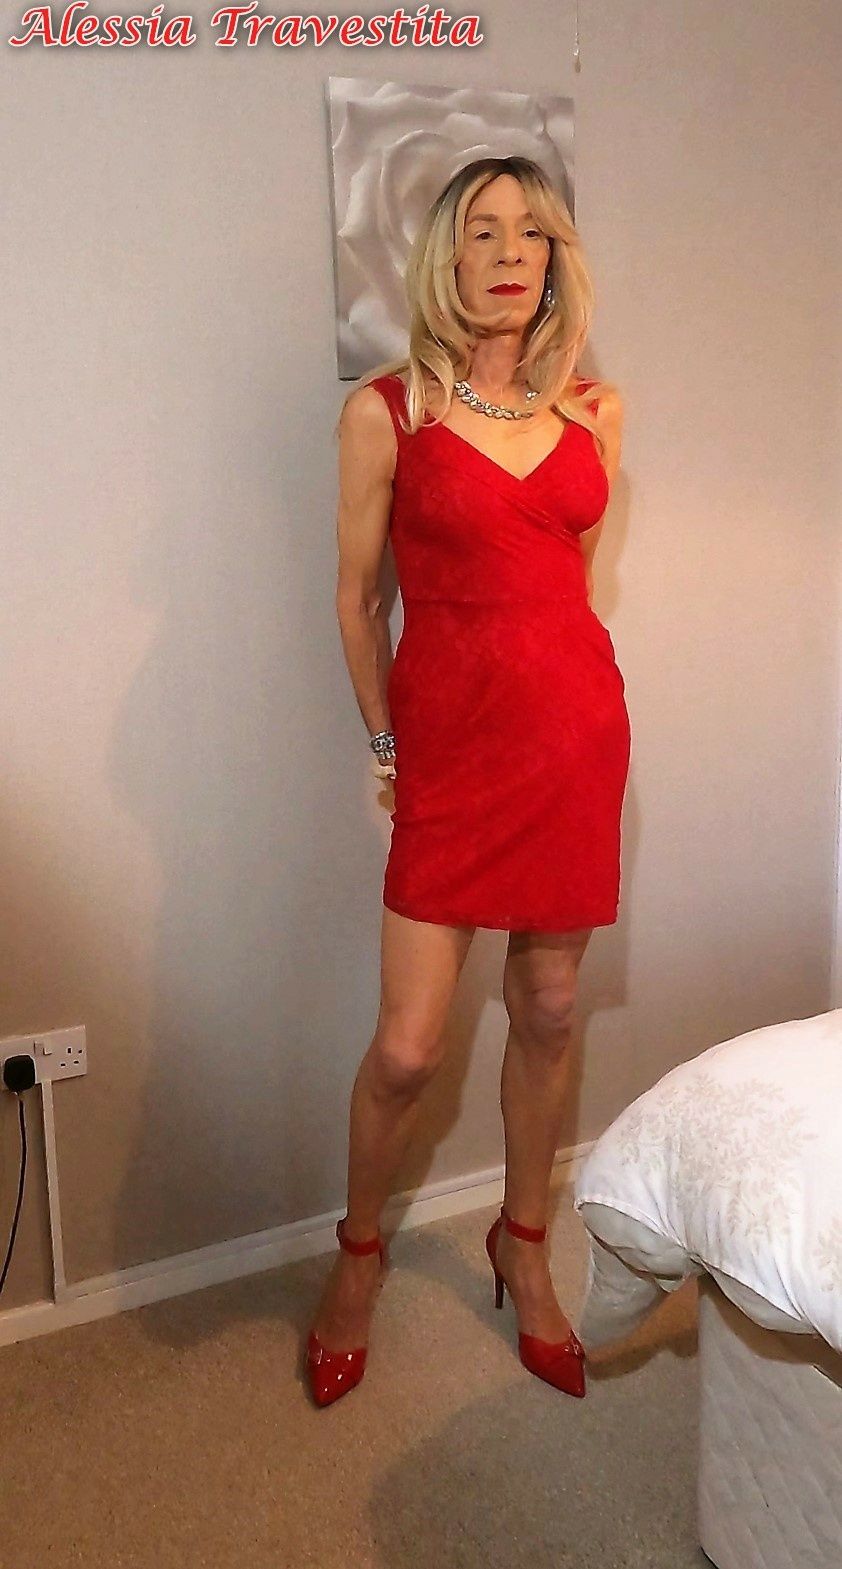 65 Alessia Travestita in Flirty Red Dress #58